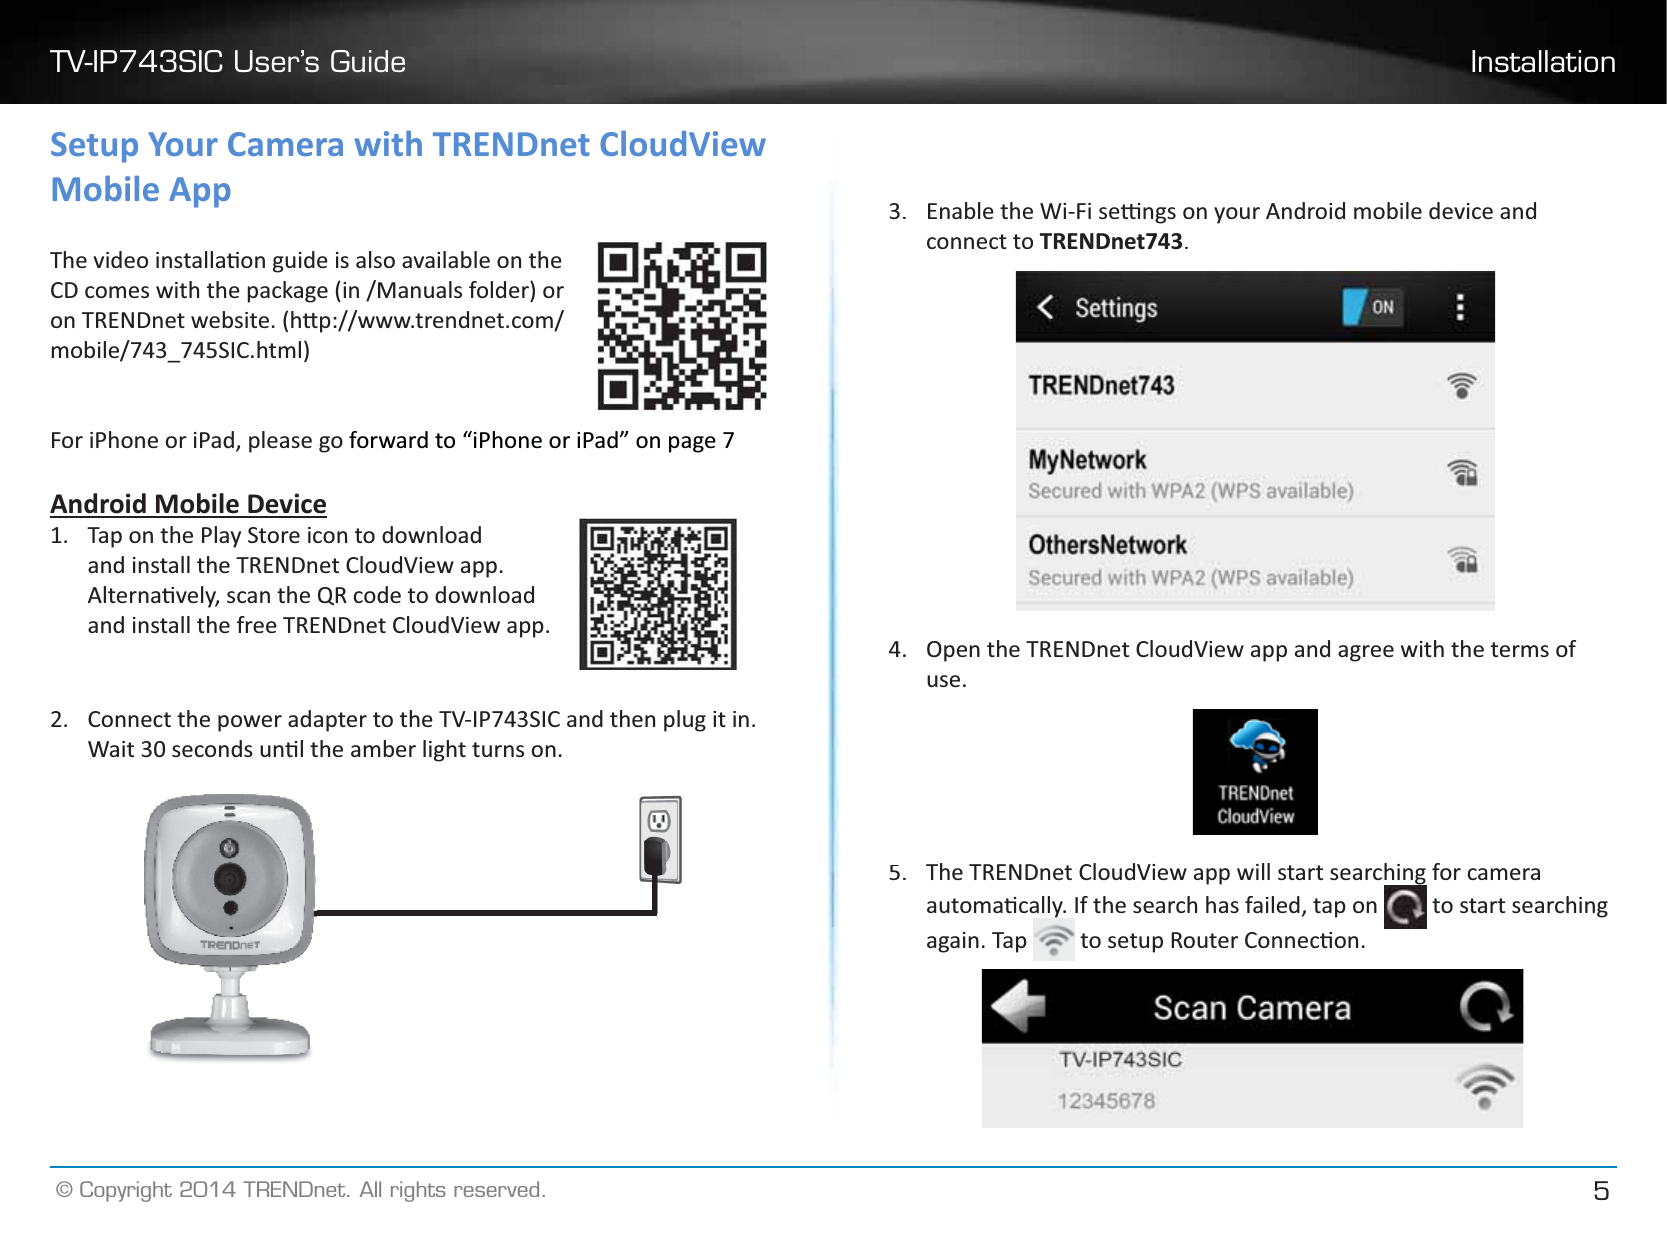 TV-IP743SIC User’s Guide Installation© Copyright 2014 TRENDnet. All rights reserved.5Setup Your Camera with TRENDnet CloudView Mobile AppdŚĞǀŝĚĞŽŝŶƐƚĂůůĂƟŽŶŐƵŝĚĞŝƐĂůƐŽĂǀĂŝůĂďůĞŽŶƚŚĞĐŽŵĞƐǁŝƚŚƚŚĞƉĂĐŬĂŐĞ;ŝŶͬDĂŶƵĂůƐĨŽůĚĞƌͿŽƌŽŶdZEŶĞƚǁĞďƐŝƚĞ͘;ŚƩƉ͗ͬͬǁǁǁ͘ƚƌĞŶĚŶĞƚ͘ĐŽŵͬŵŽďŝůĞͬϳϰϯͺϳϰϱ^/͘ŚƚŵůͿFor iPhone or iPad, please go forward to “iPhone or iPad” on page 7AndroidMobile Device1.Tap on the Play Store icon to downloadand install the TRENDnet CloudView app.ůƚĞƌŶĂƟǀĞůǇ͕ƐĐĂŶƚŚĞYZĐŽĚĞƚŽĚŽǁŶůŽĂĚand install the free TRENDnet CloudView app.2.Connect the power adapter to the TV-IP743SIC and then plug it in.tĂŝƚϯϬƐĞĐŽŶĚƐƵŶƟůƚŚĞĂŵďĞƌůŝŐŚƚƚƵƌŶƐŽŶ͘3.ŶĂďůĞƚŚĞtŝͲ&amp;ŝƐĞƫŶŐƐŽŶǇŽƵƌŶĚƌŽŝĚŵŽďŝůĞĚĞǀŝĐĞĂŶĚconnect toTRENDnet743.4.Open the TRENDnet CloudView app and agree with the terms of use.5.The TRENDnet CloudView app will start searching for camera ĂƵƚŽŵĂƟĐĂůůǇ͘/ĨƚŚĞƐĞĂƌĐŚŚĂƐĨĂŝůĞĚ͕ƚĂƉŽŶ  to start searching again. Tap  ƚŽƐĞƚƵƉZŽƵƚĞƌŽŶŶĞĐƟŽŶ͘